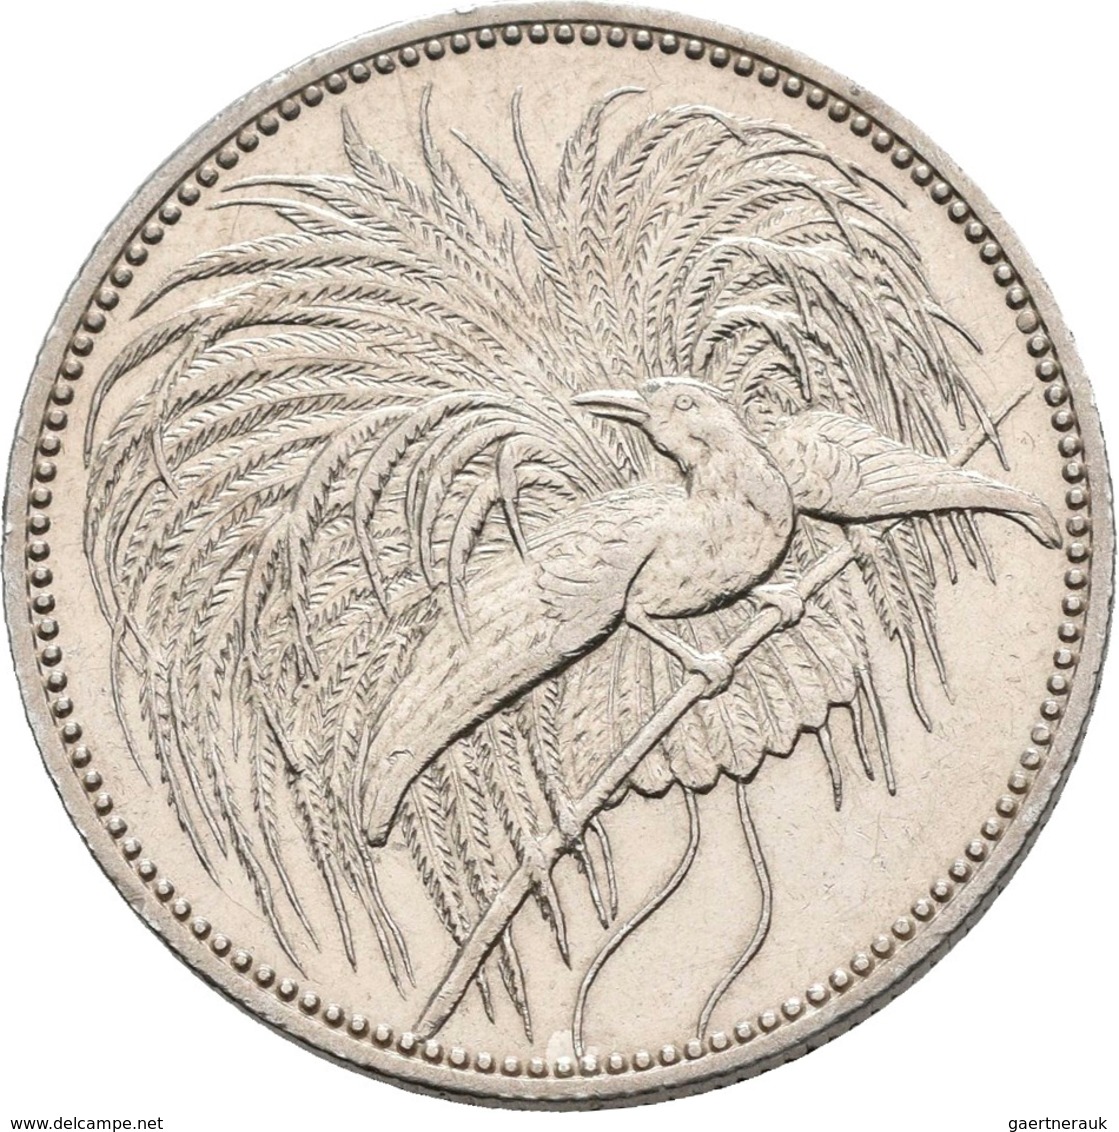 Deutsch-Neuguinea: 1 Neu-Guinea Mark 1894 A, Paradiesvogel, Jaeger 705, Feine Kratzer, Sehr Schön - - Nueva Guinea Alemana